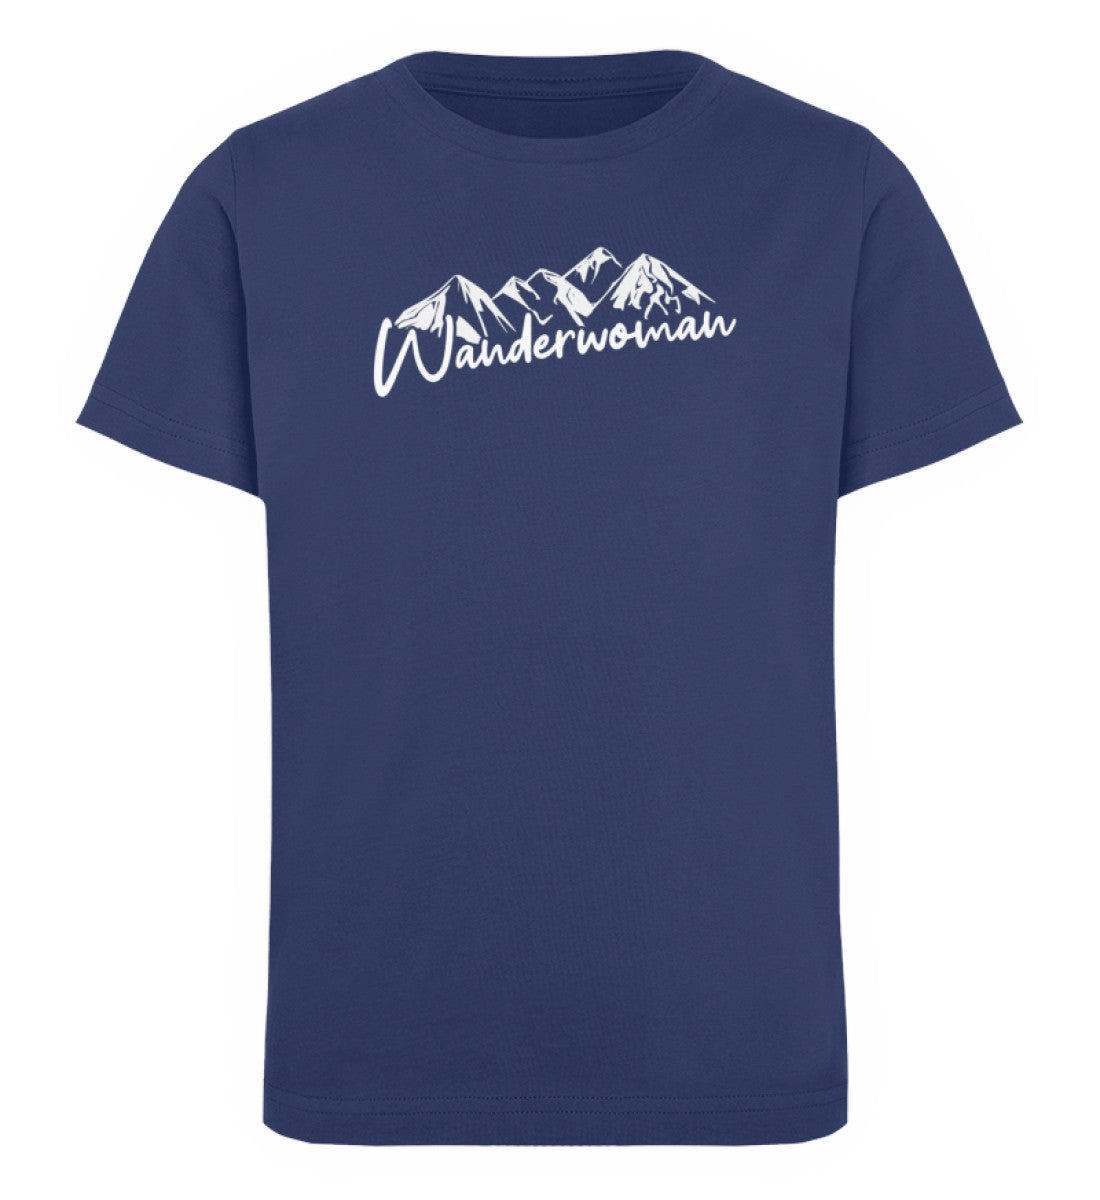 Wanderwoman - Kinder Premium Organic T-Shirt Navyblau